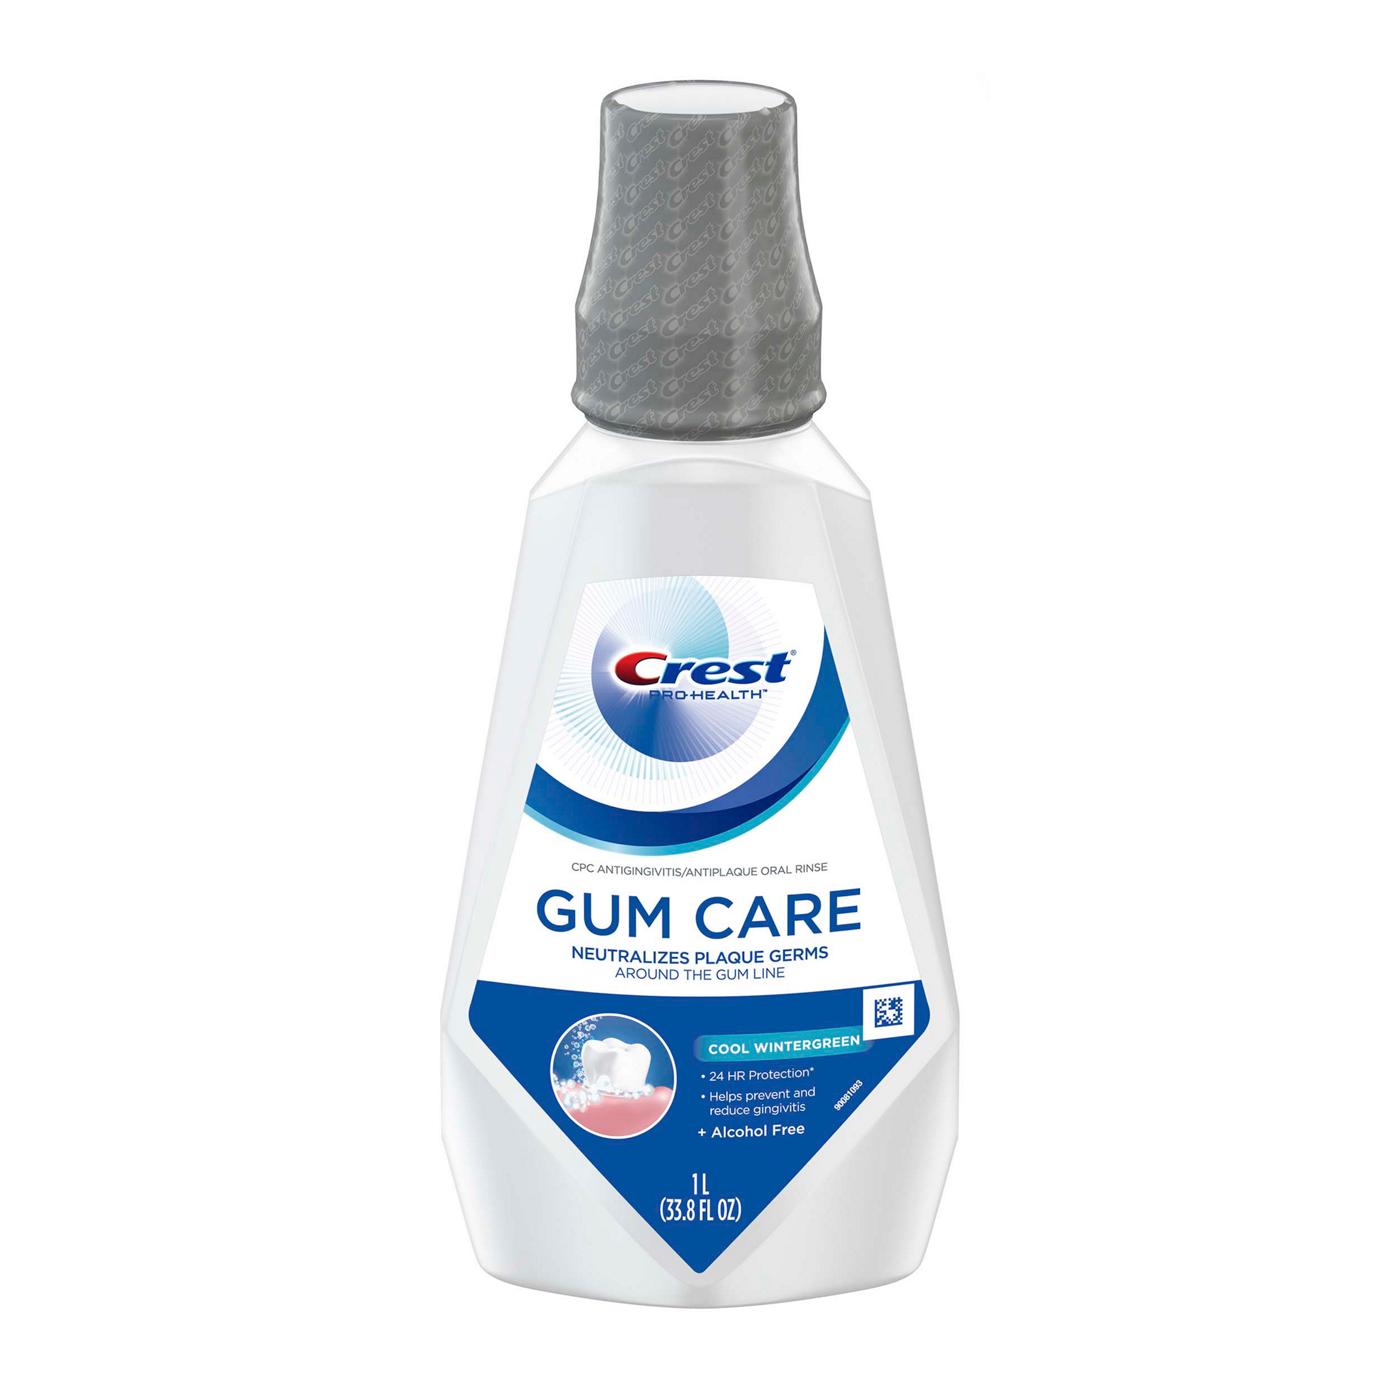 Crest Gum Care Mouthwash - Cool Wintergreen; image 1 of 9